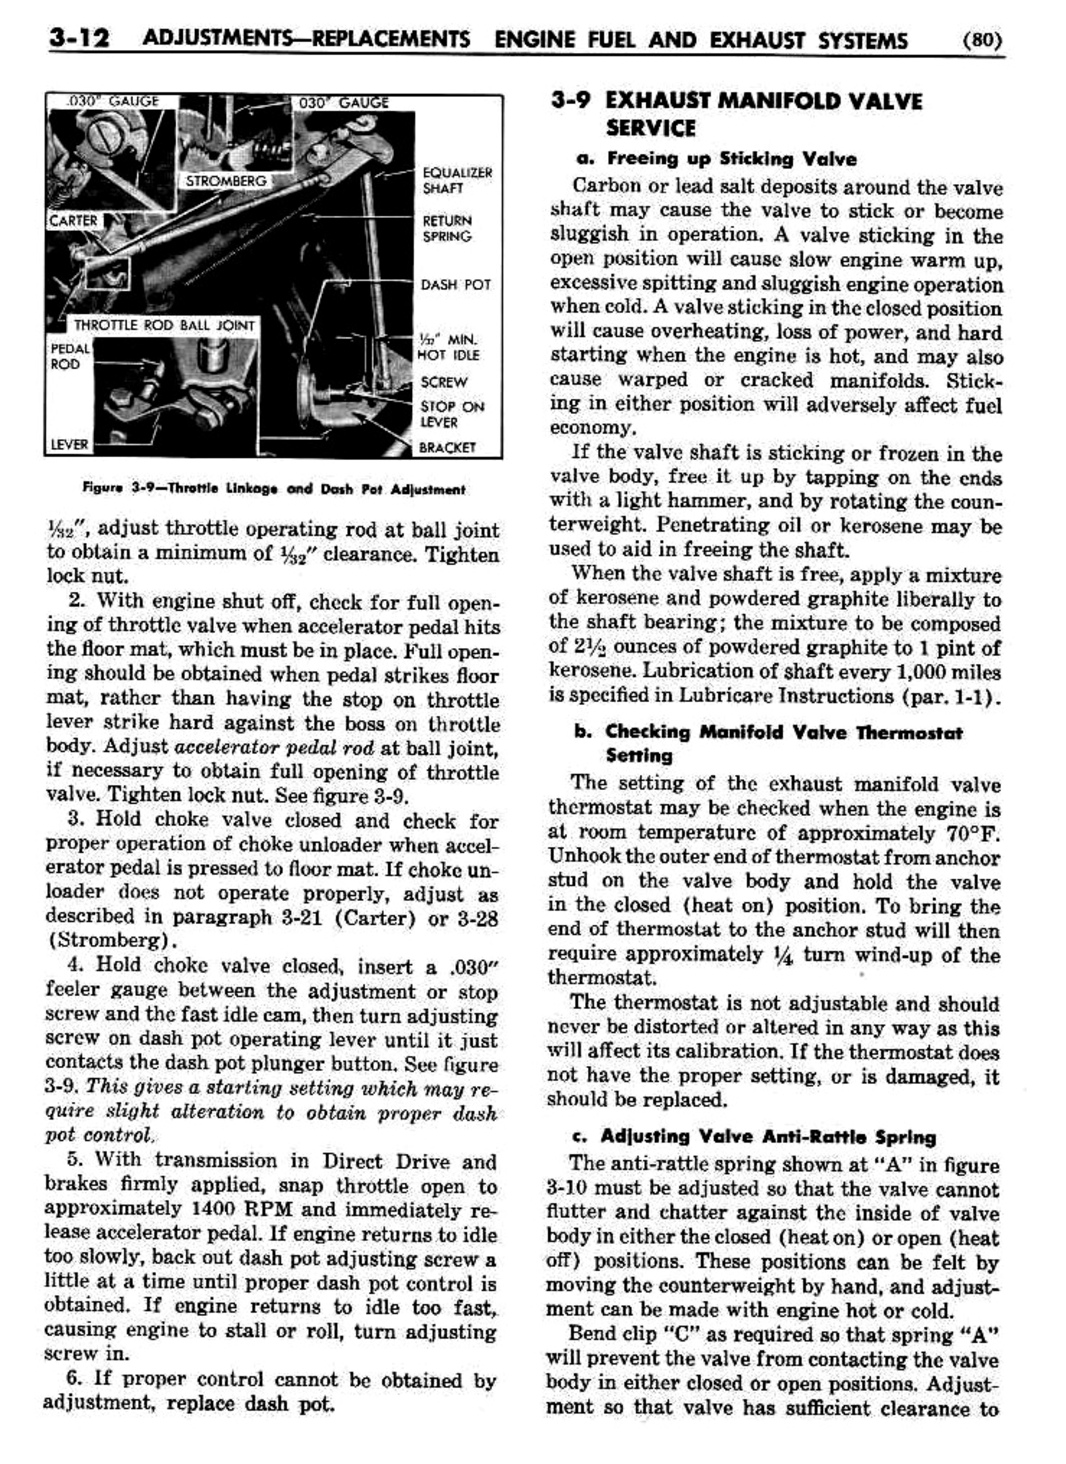 n_04 1951 Buick Shop Manual - Engine Fuel & Exhaust-012-012.jpg